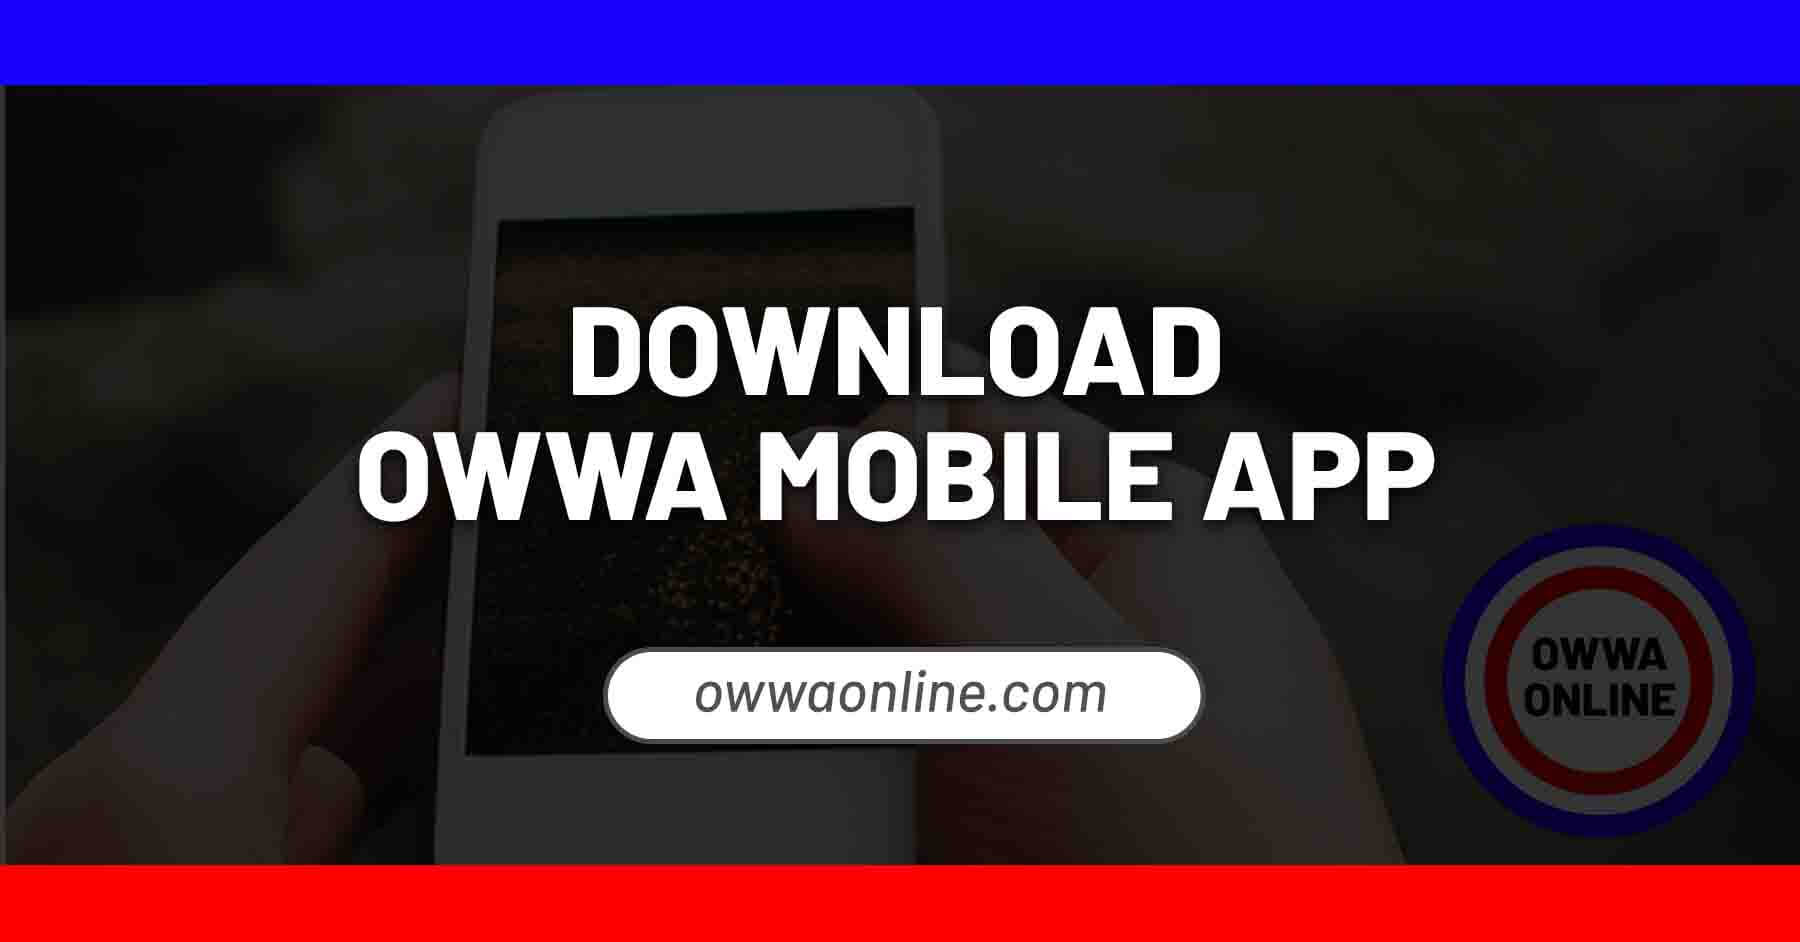 download owwa mobile app online